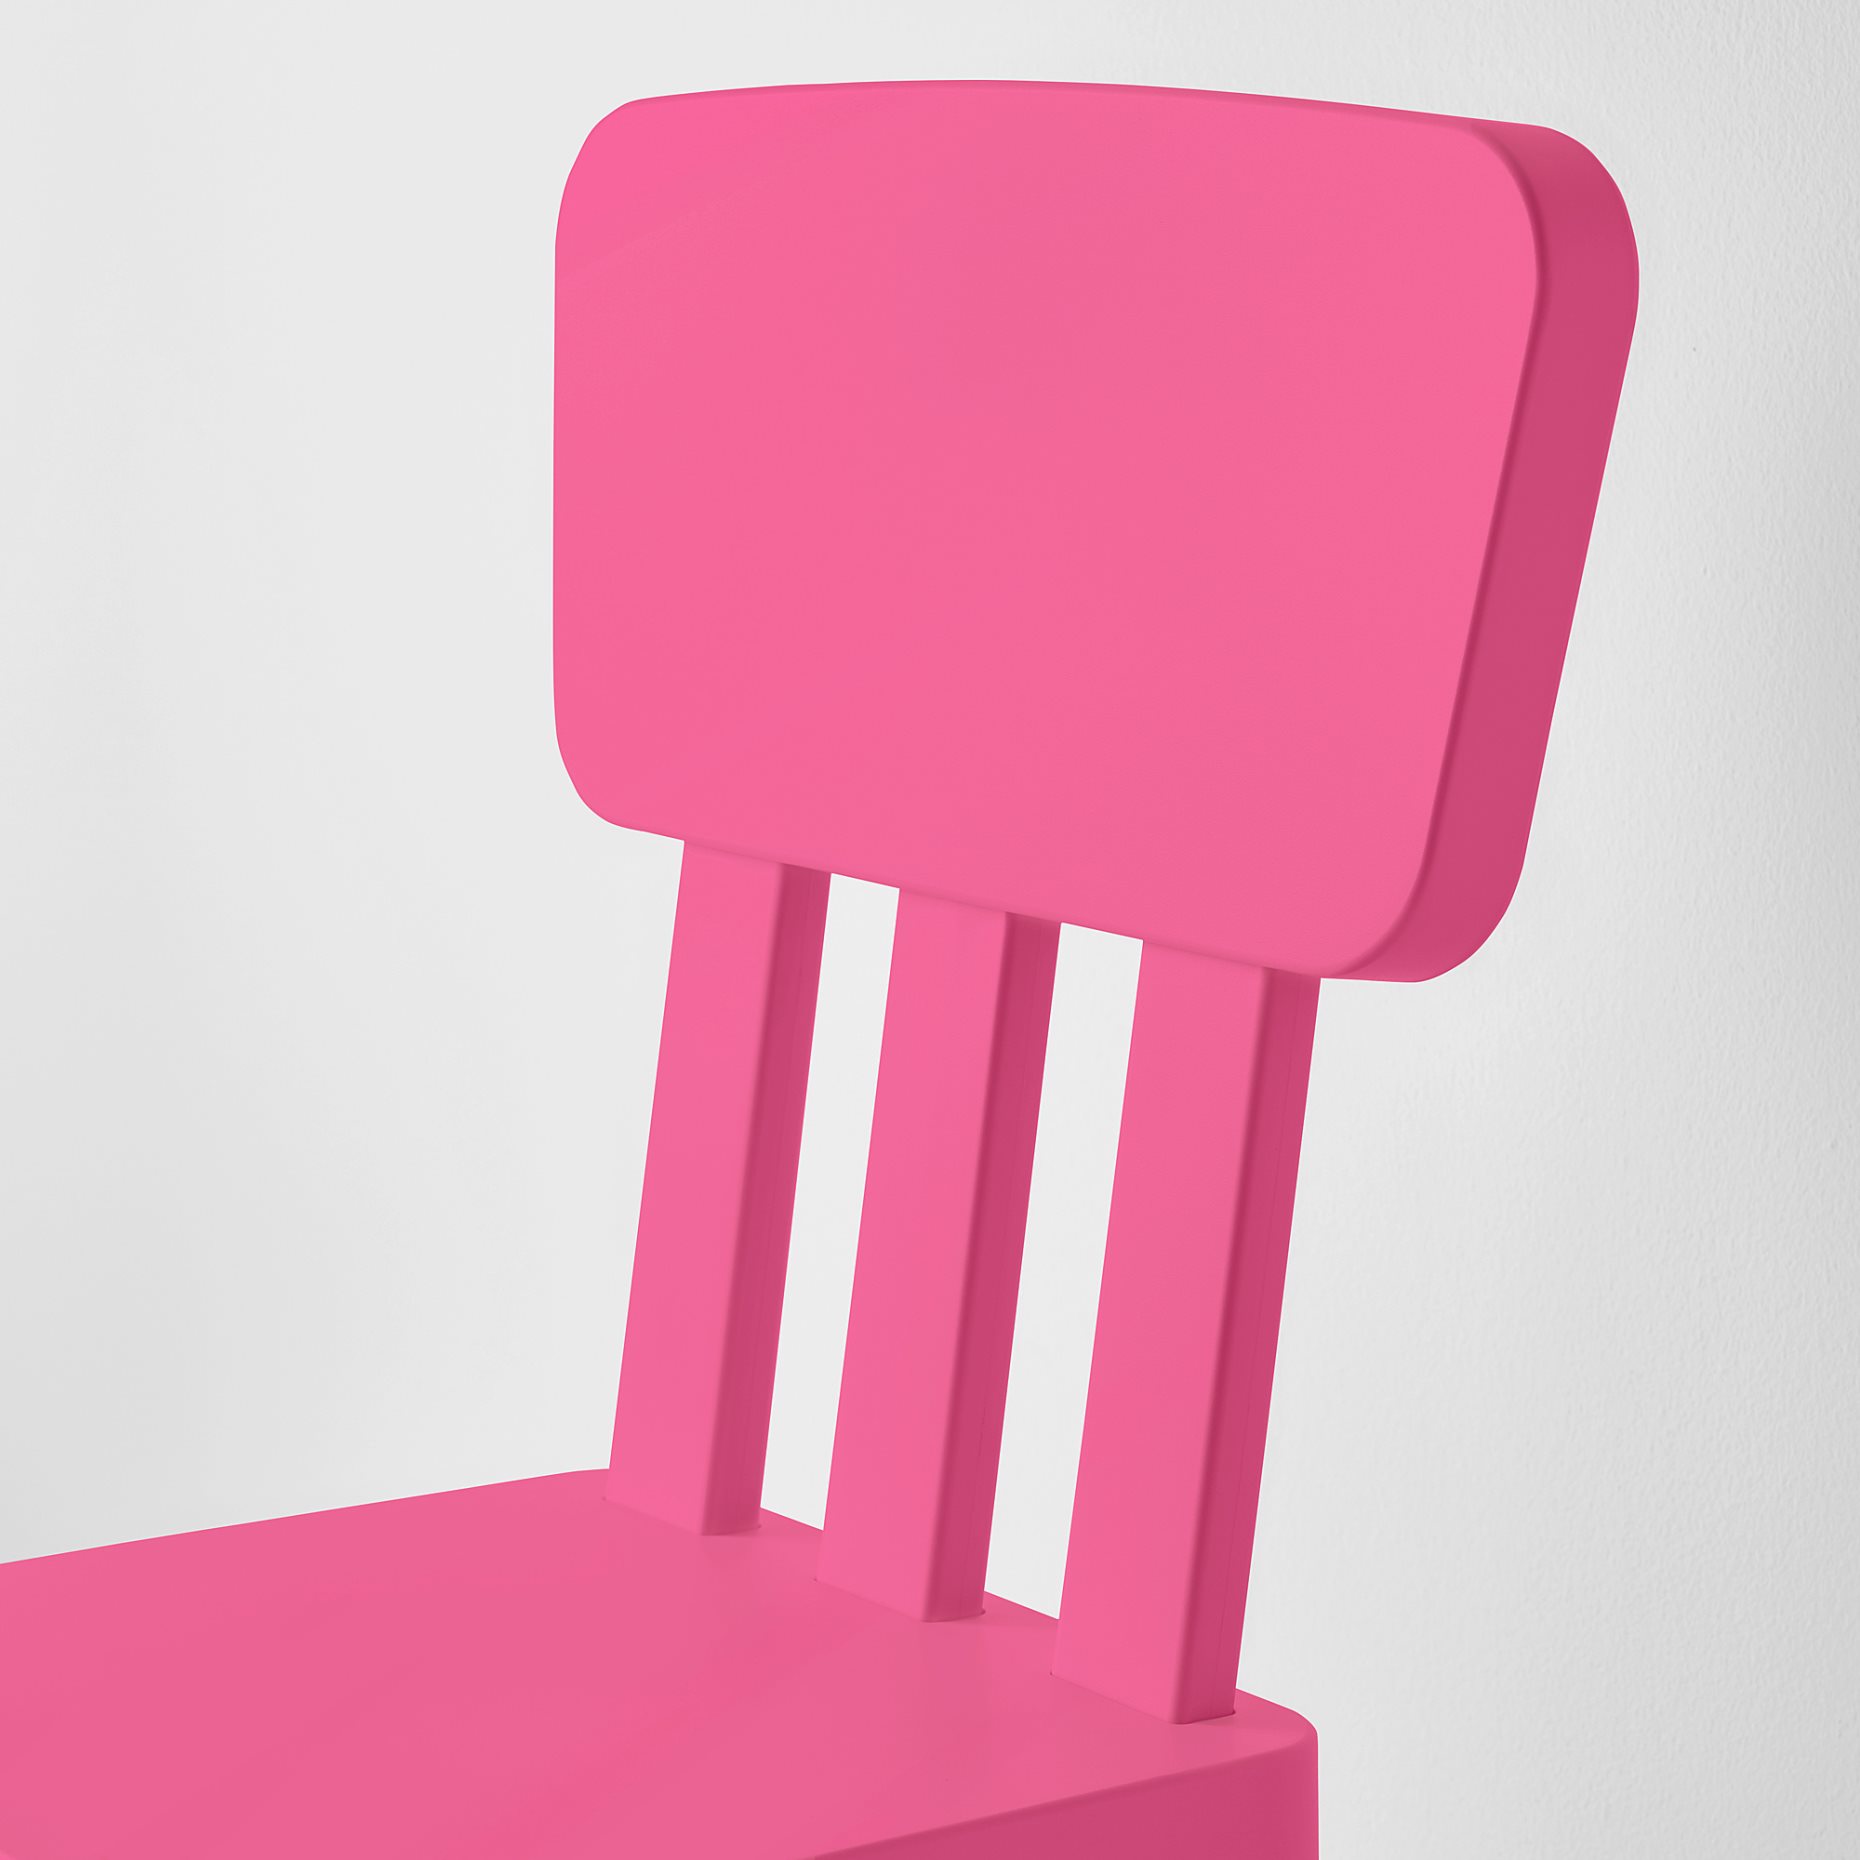 MAMMUT, παιδική καρέκλα,εσωτερικού/εξωτερικού χώρου, 803.823.21